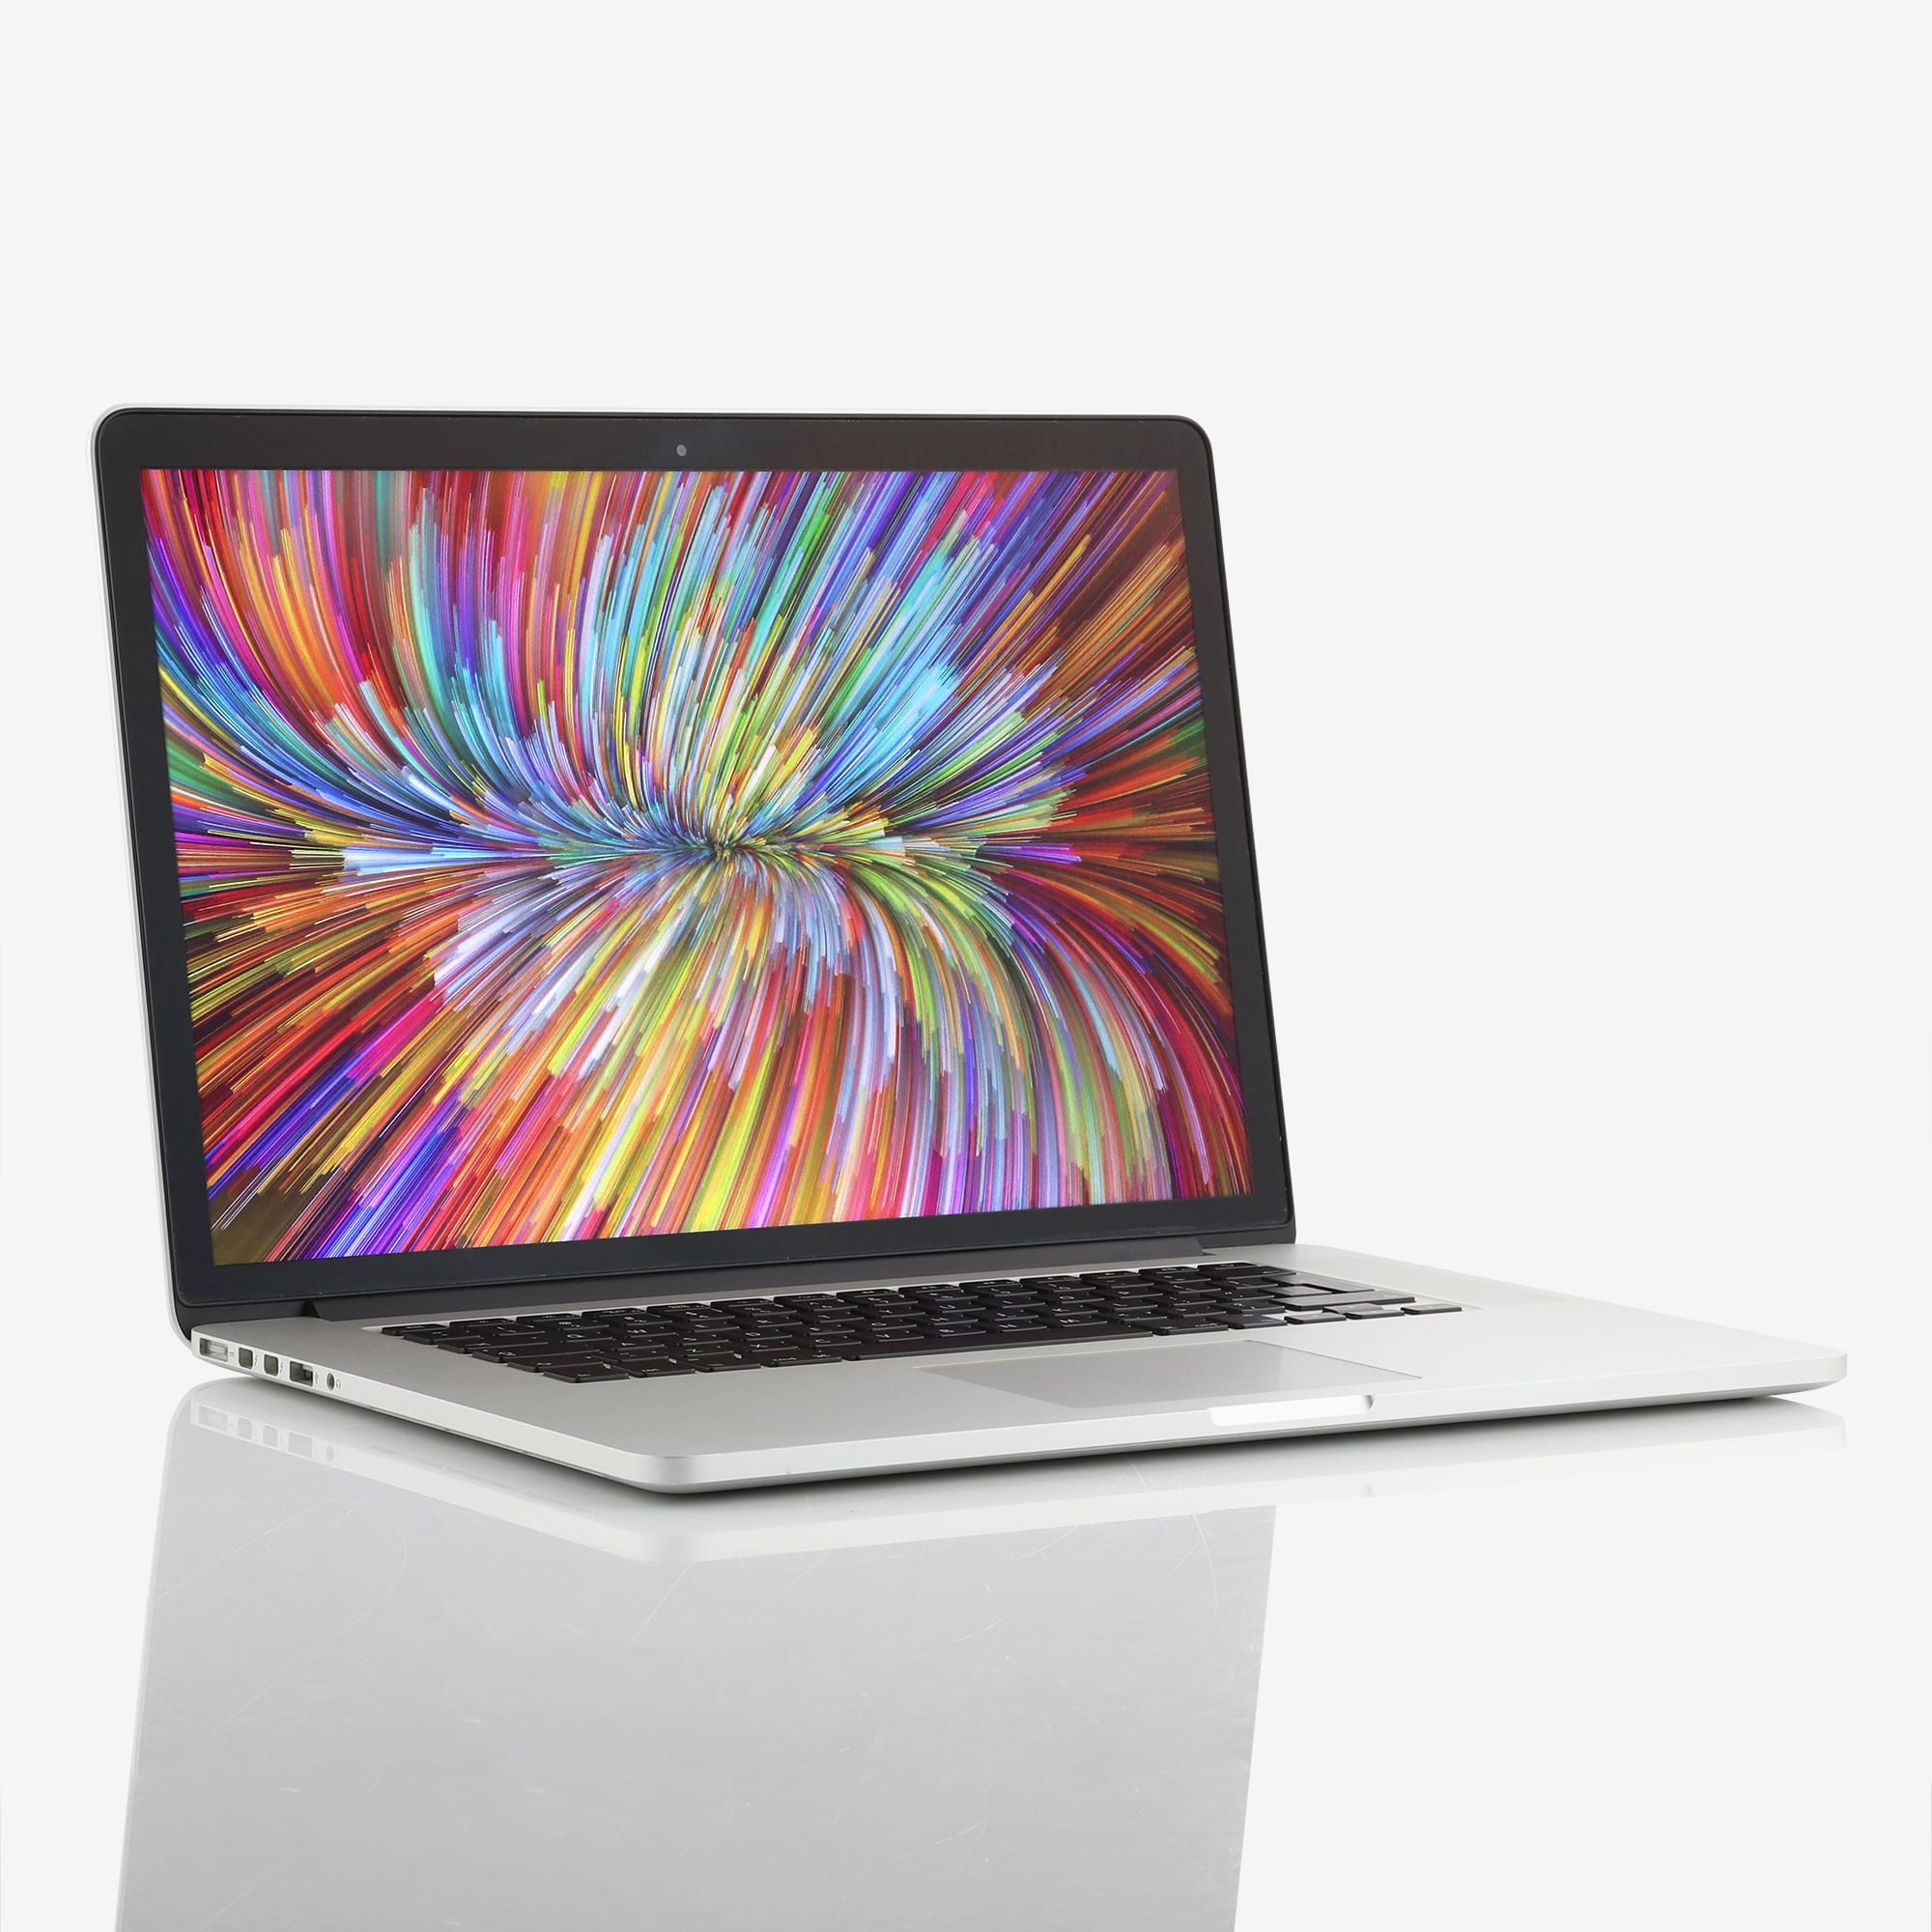 1 x MacBook Pro Retina 15 Inch